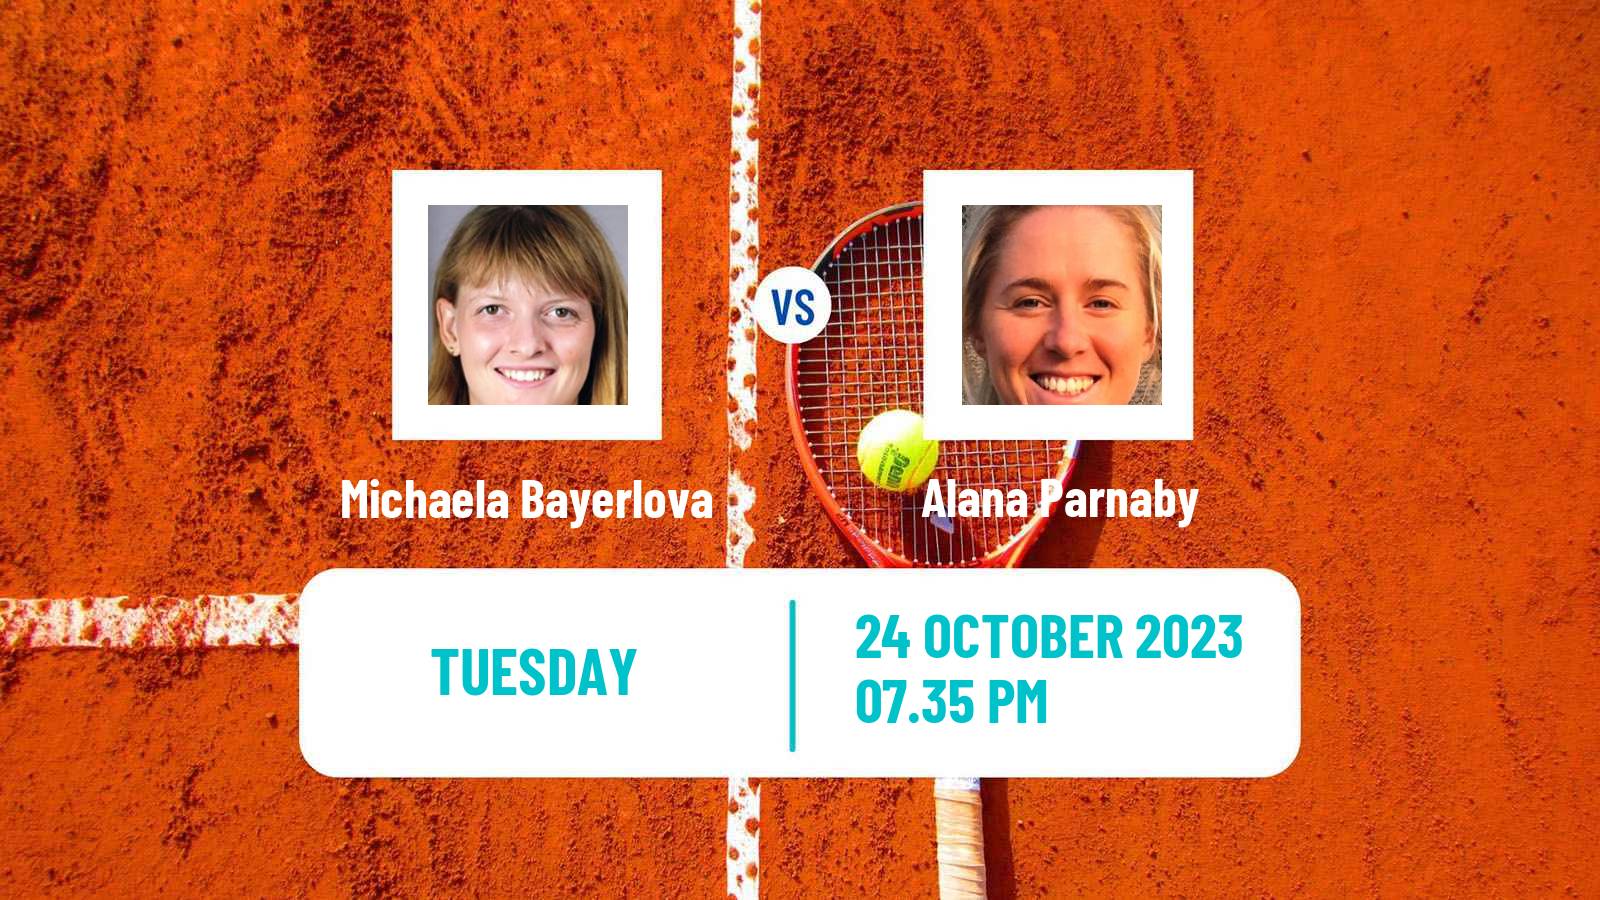 Tennis ITF W60 Playford Women Michaela Bayerlova - Alana Parnaby